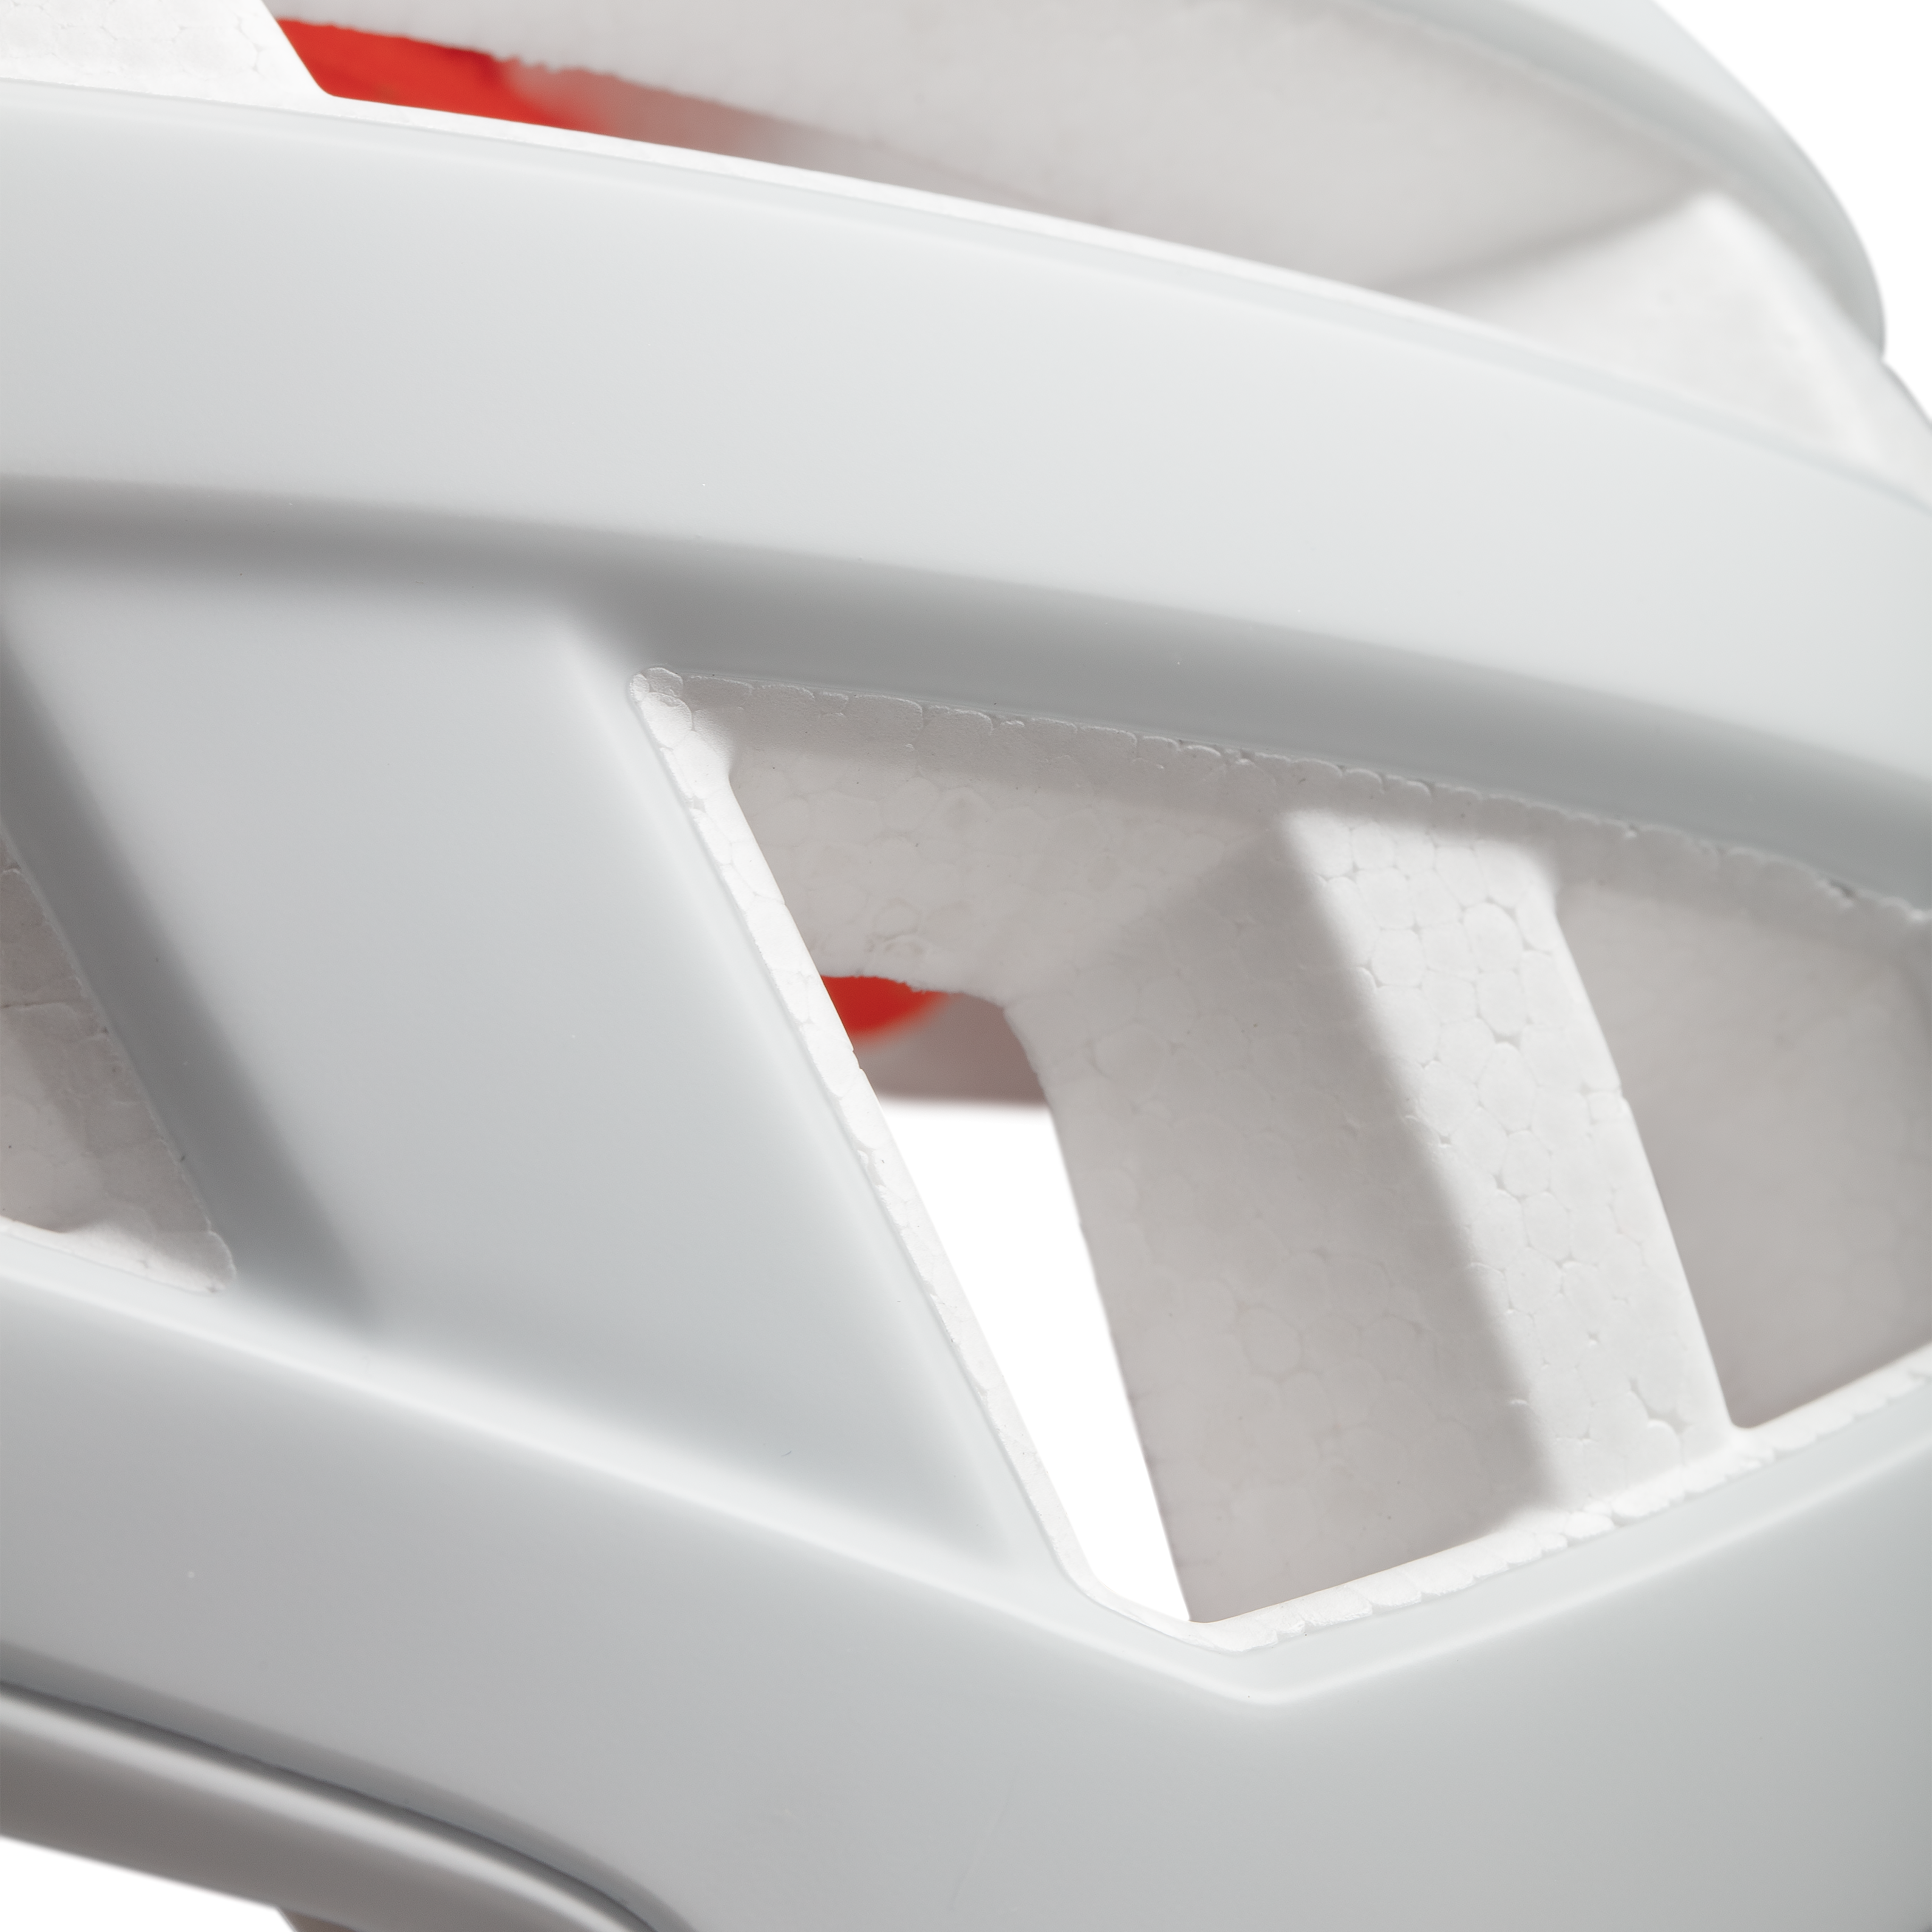 Crag Sender Helmet product image